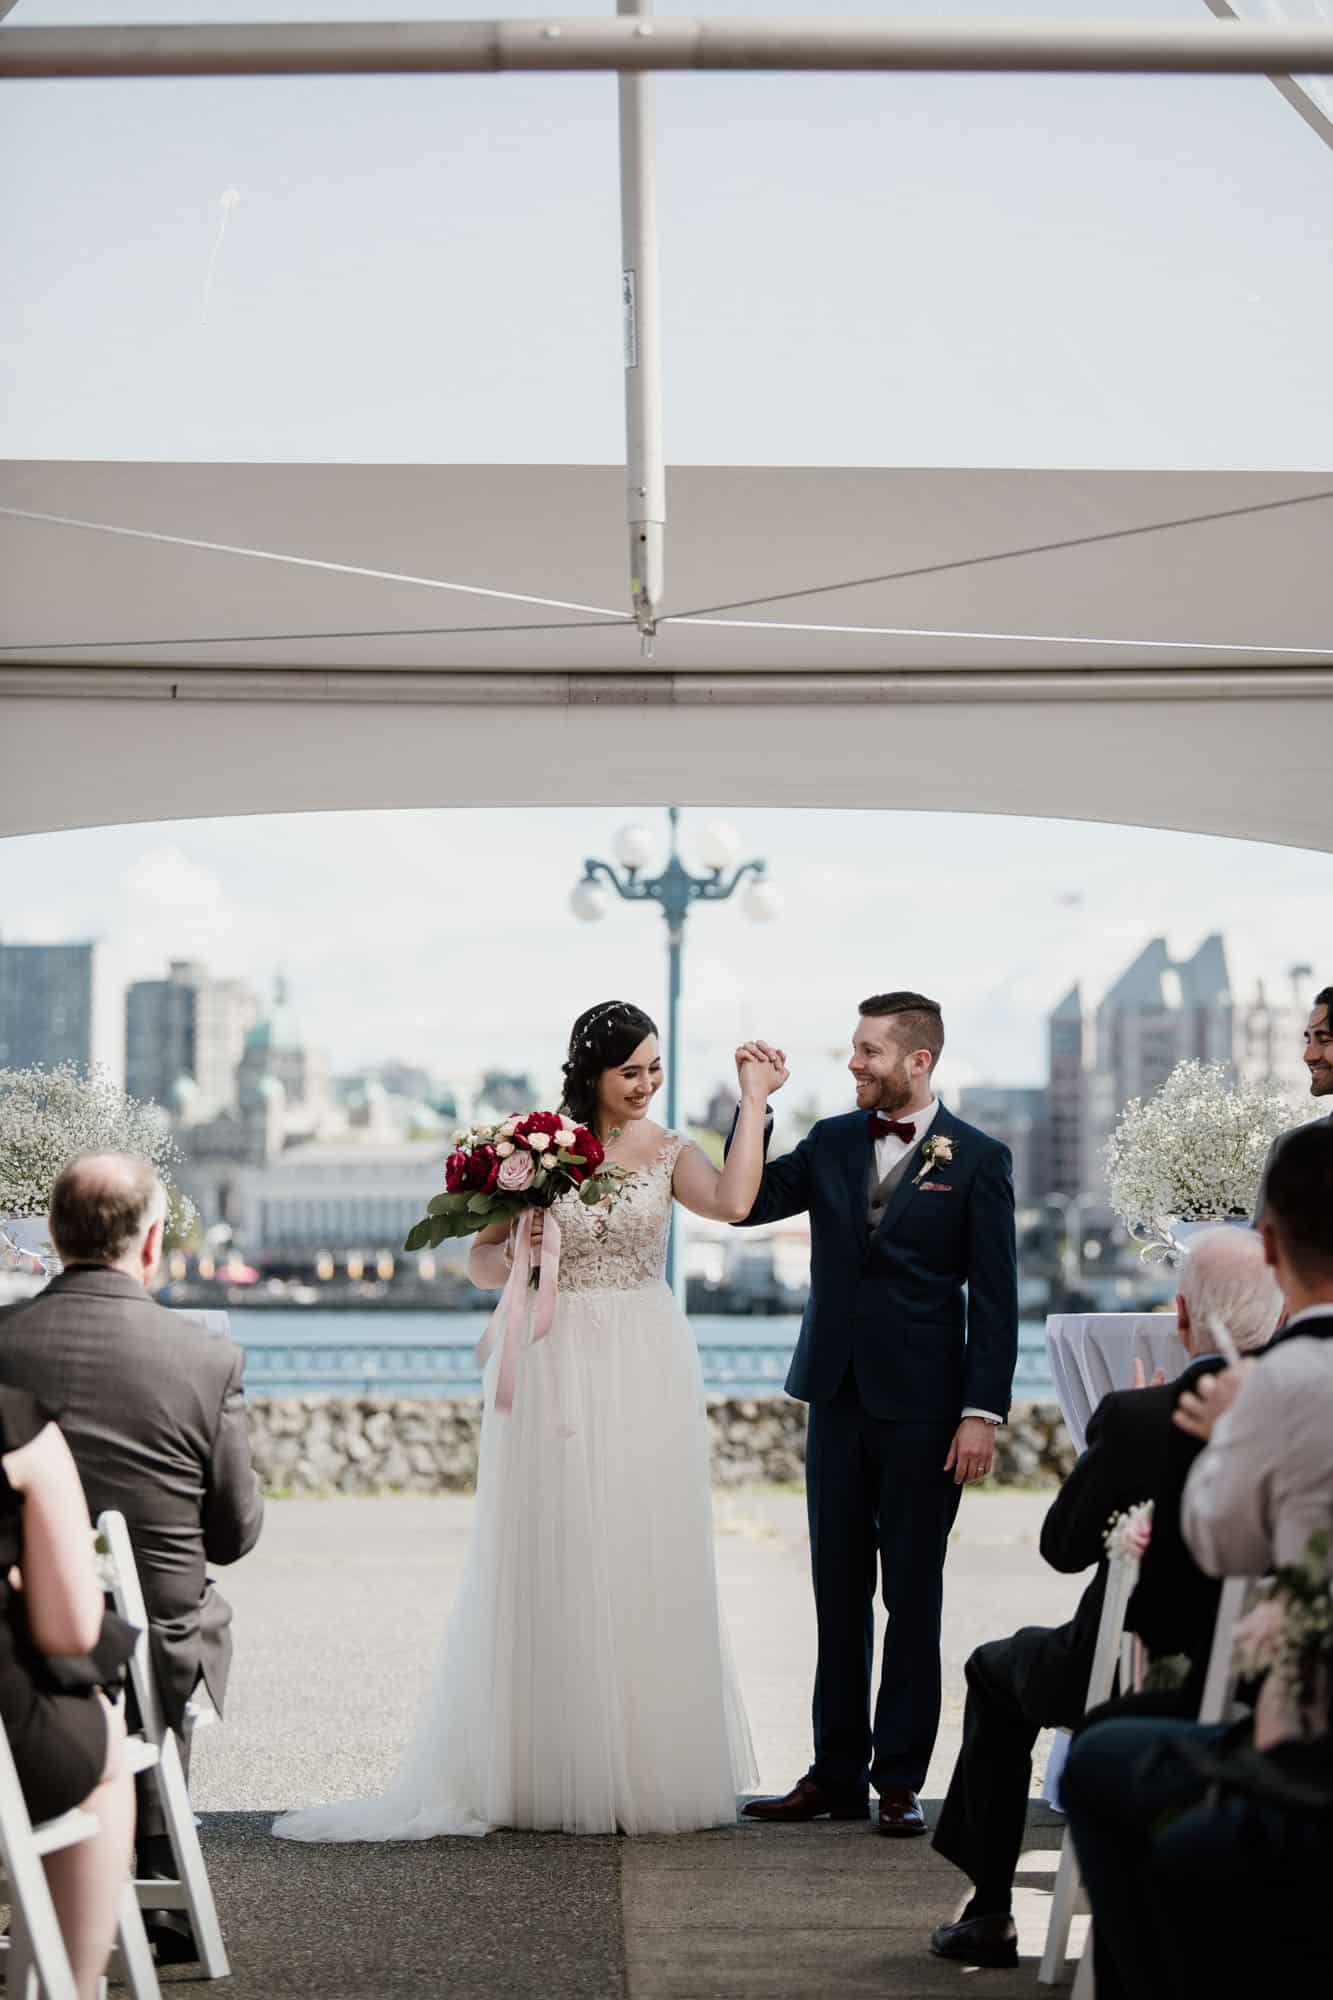 Delta Victoria Weddings Vancouver Island Photographer-41